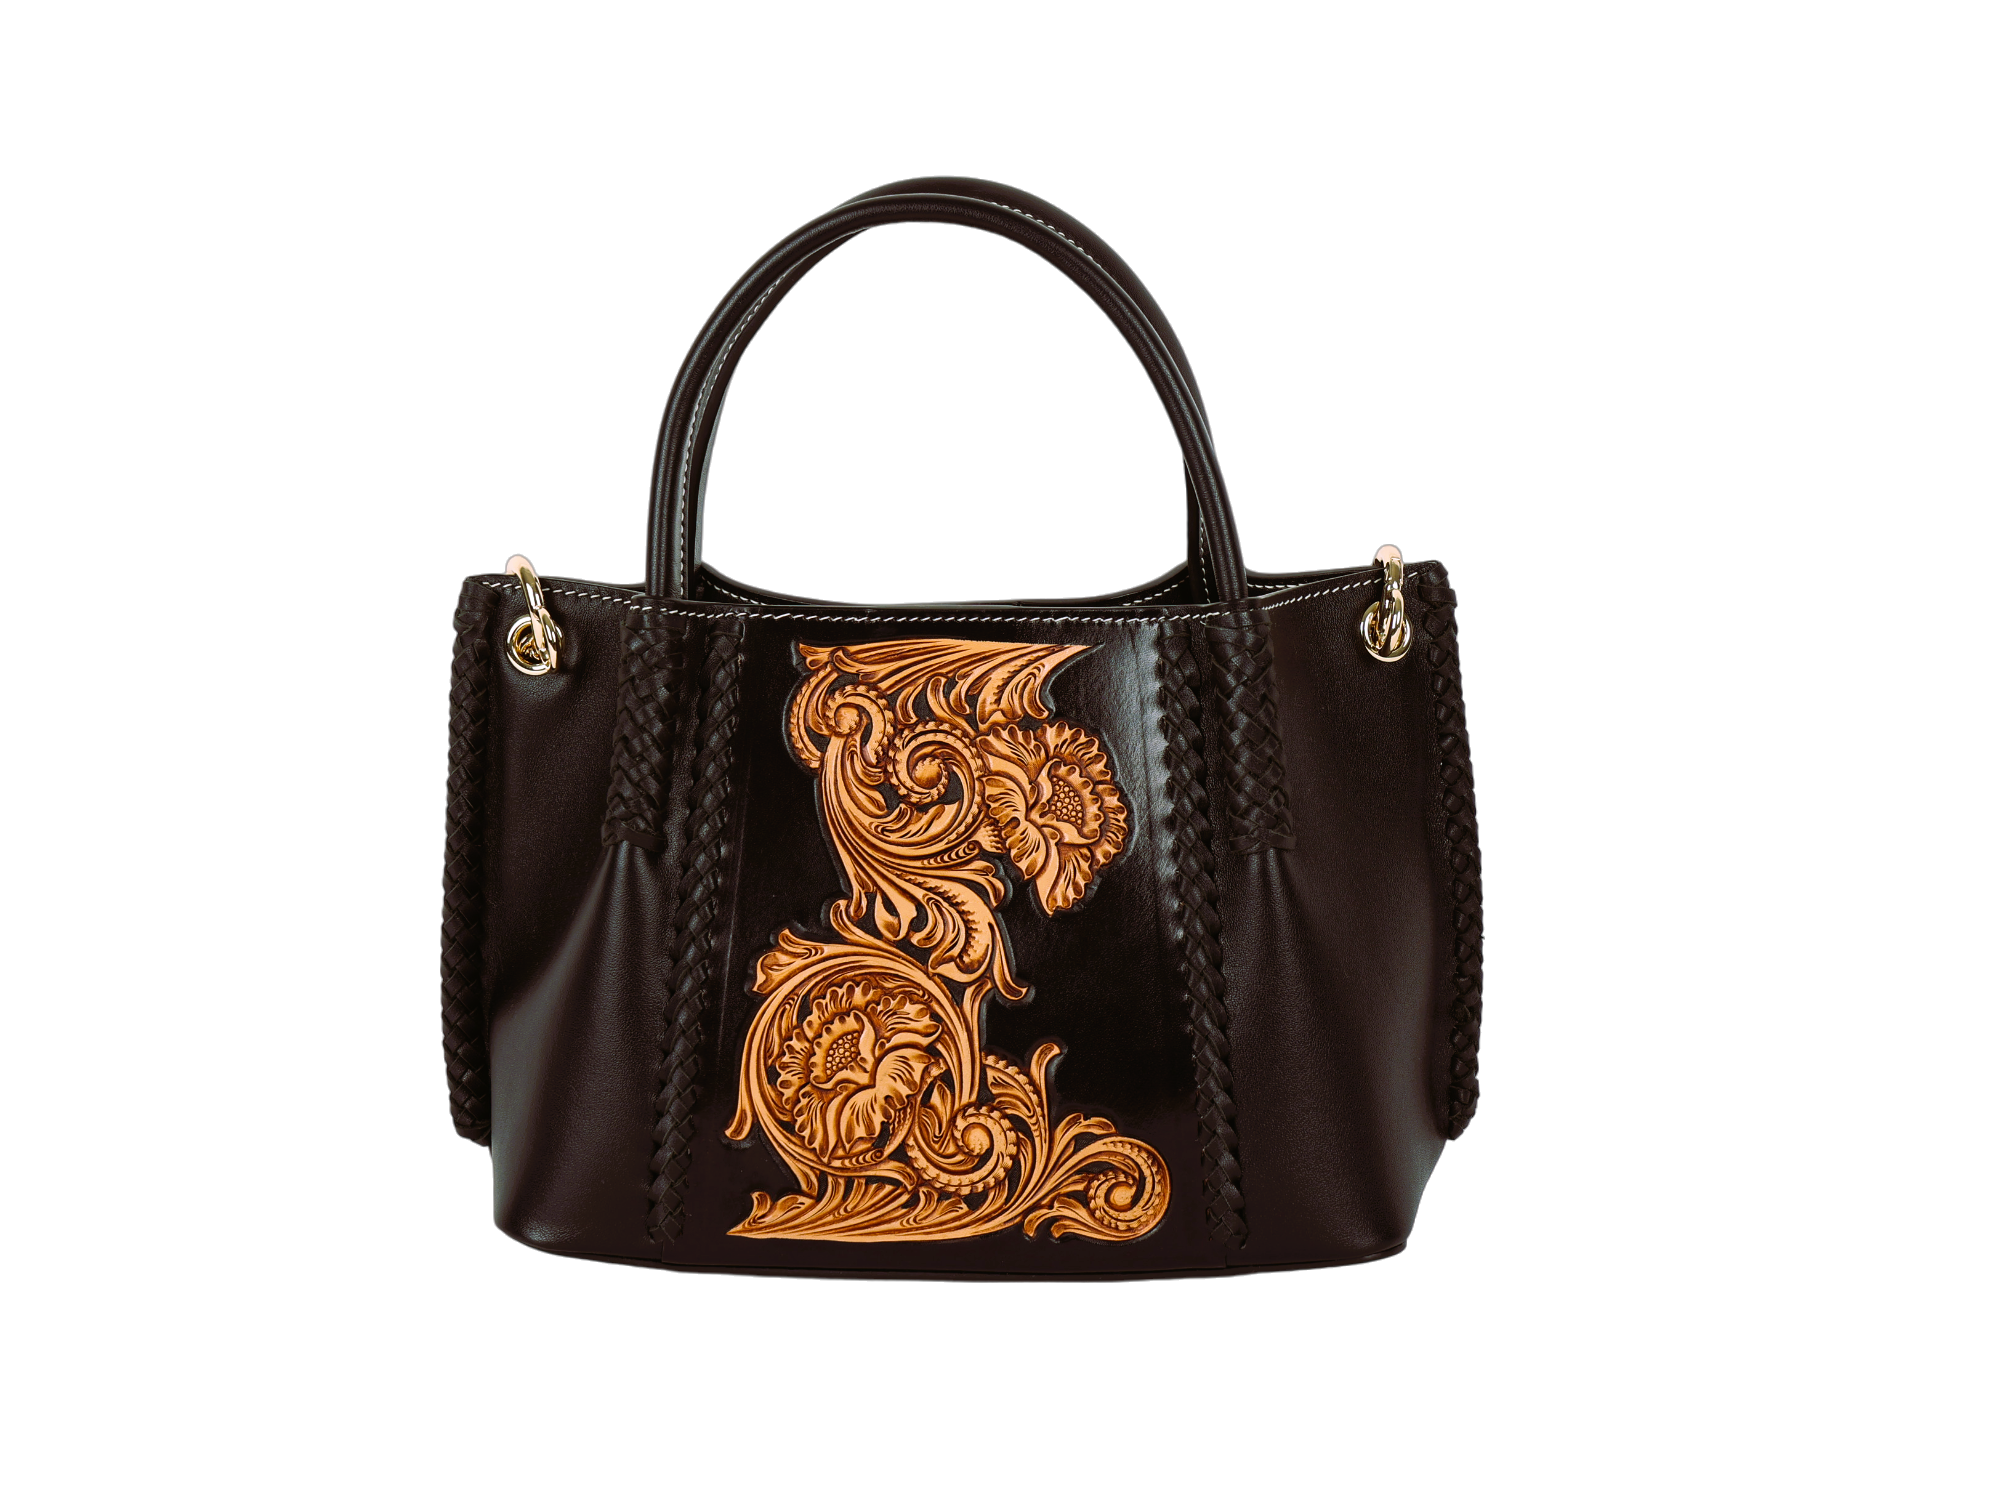 Buy Handbags & Purses - Designer Brands For Sale At Auction | Invaluable